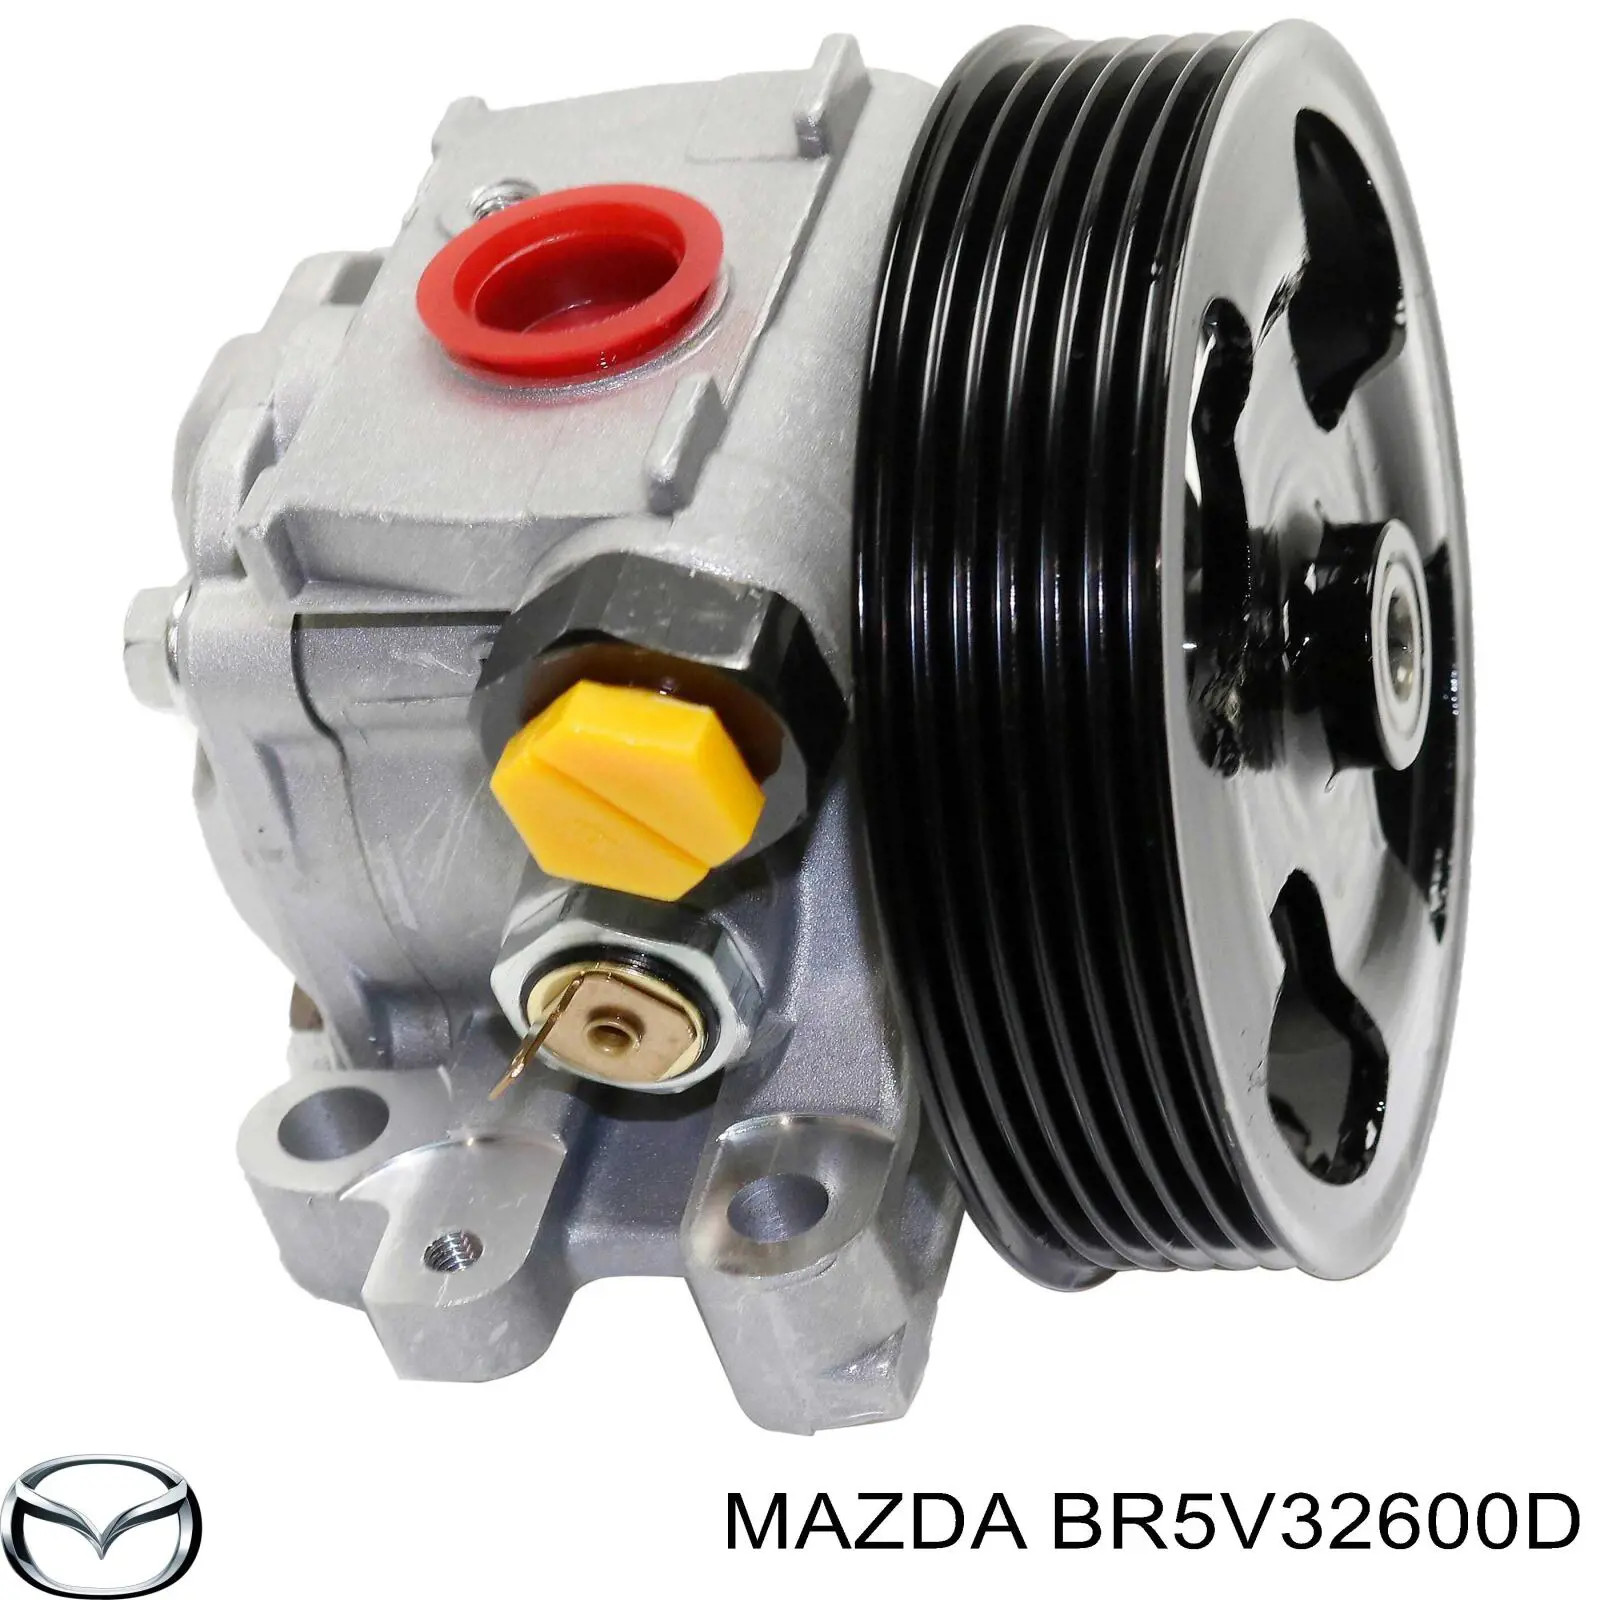 BR5V32600D Mazda насос гідропідсилювача керма (гпк)